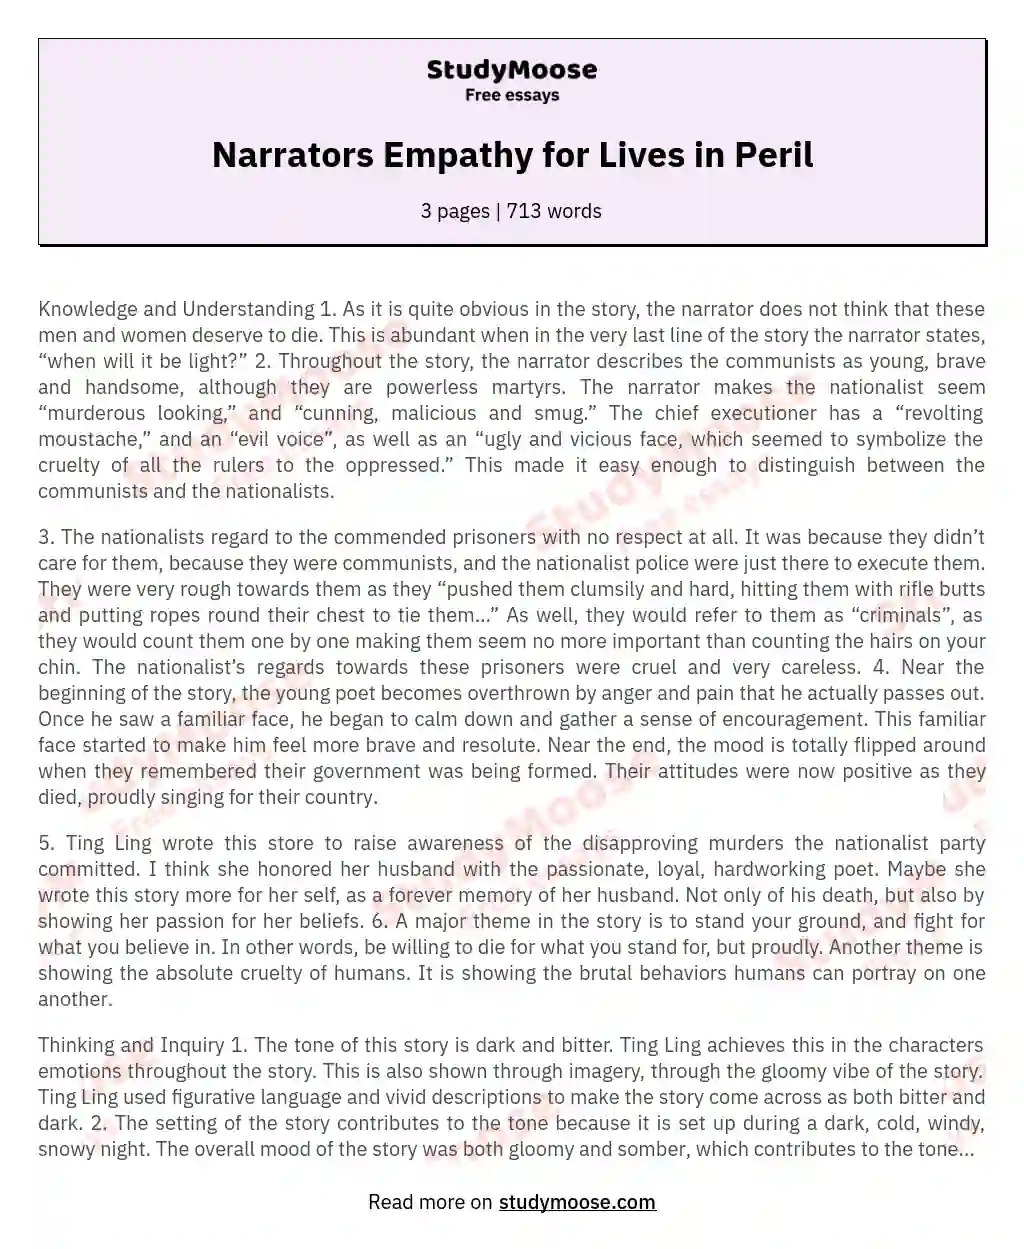 Narrators Empathy for Lives in Peril essay